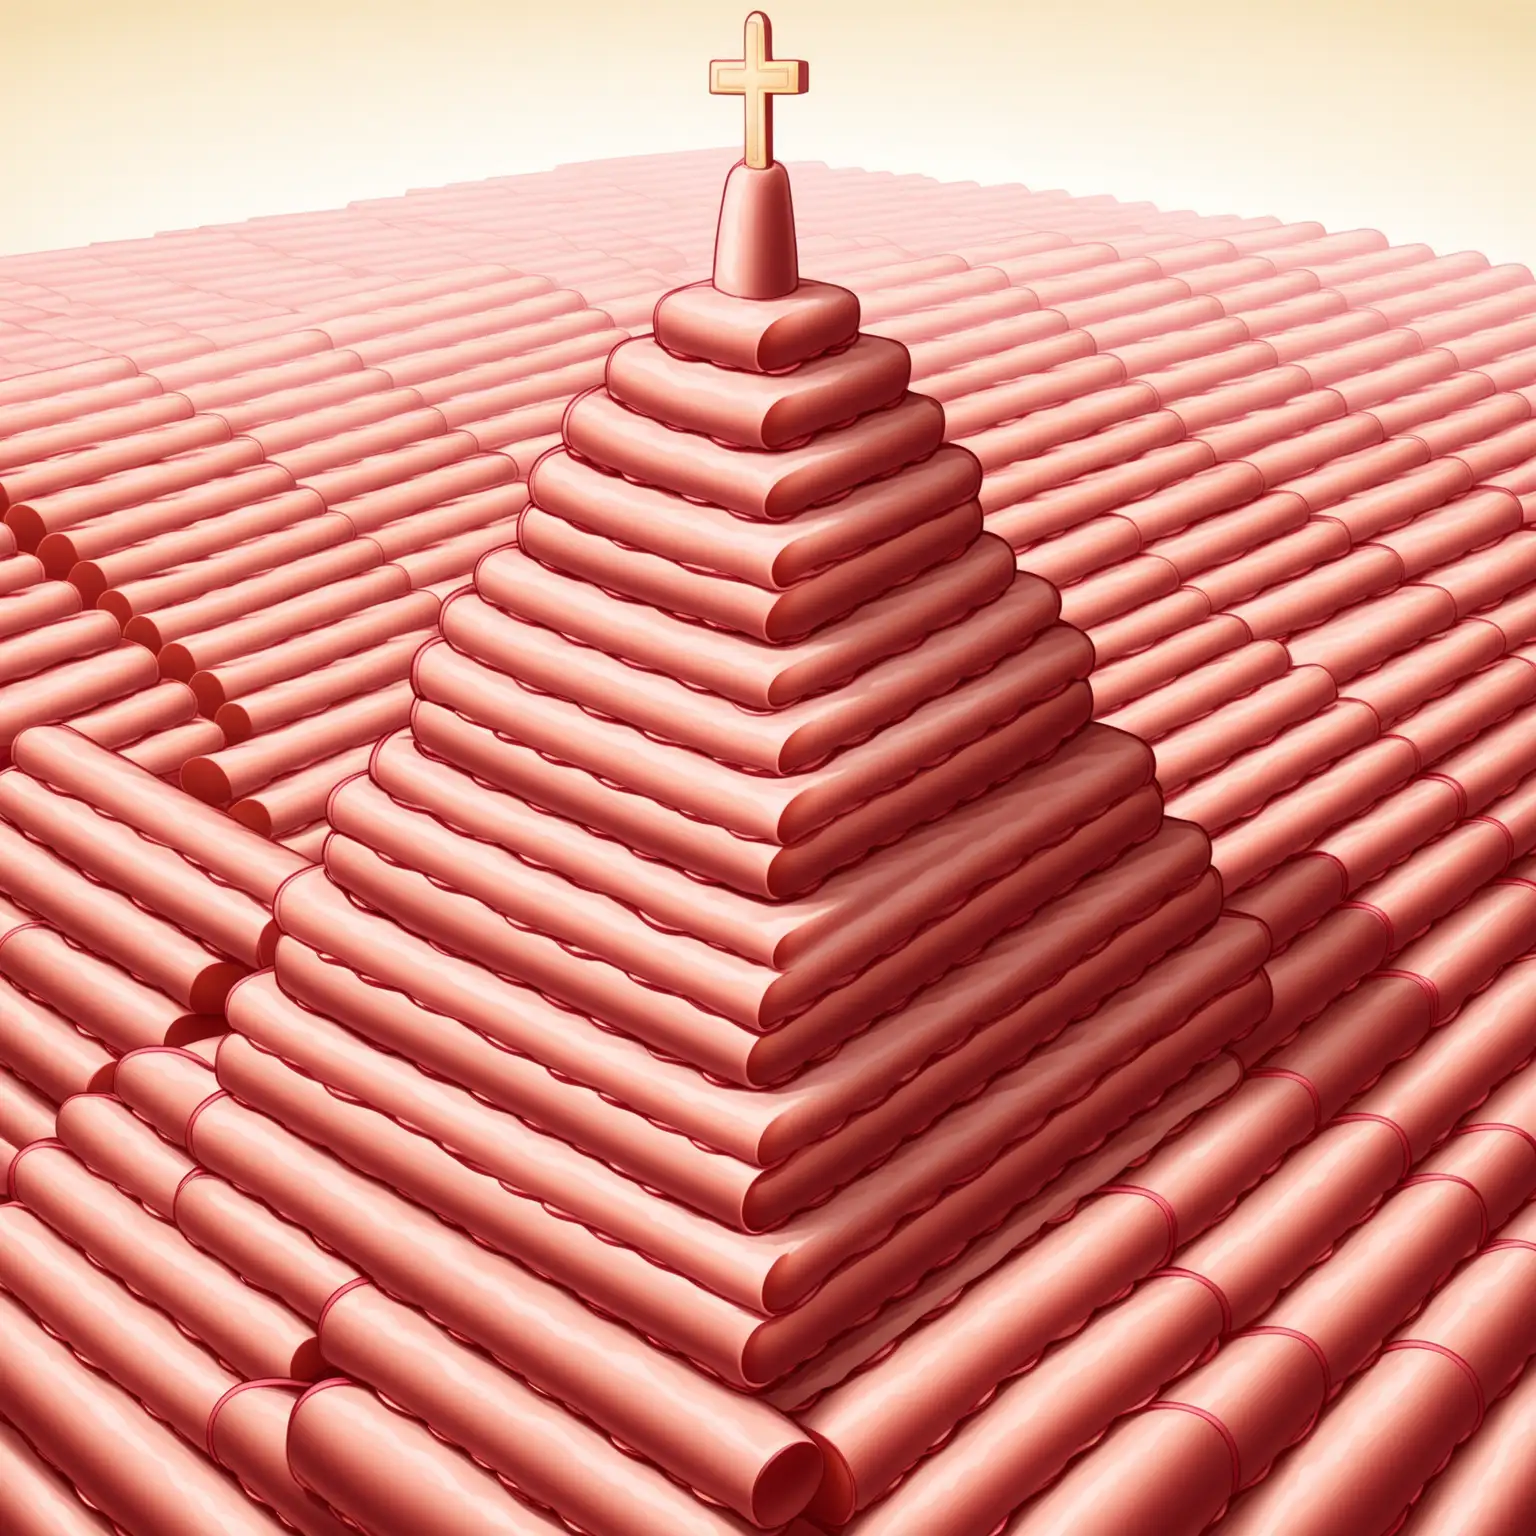 Cartoon Church made of stacks of bologna folded bologna 